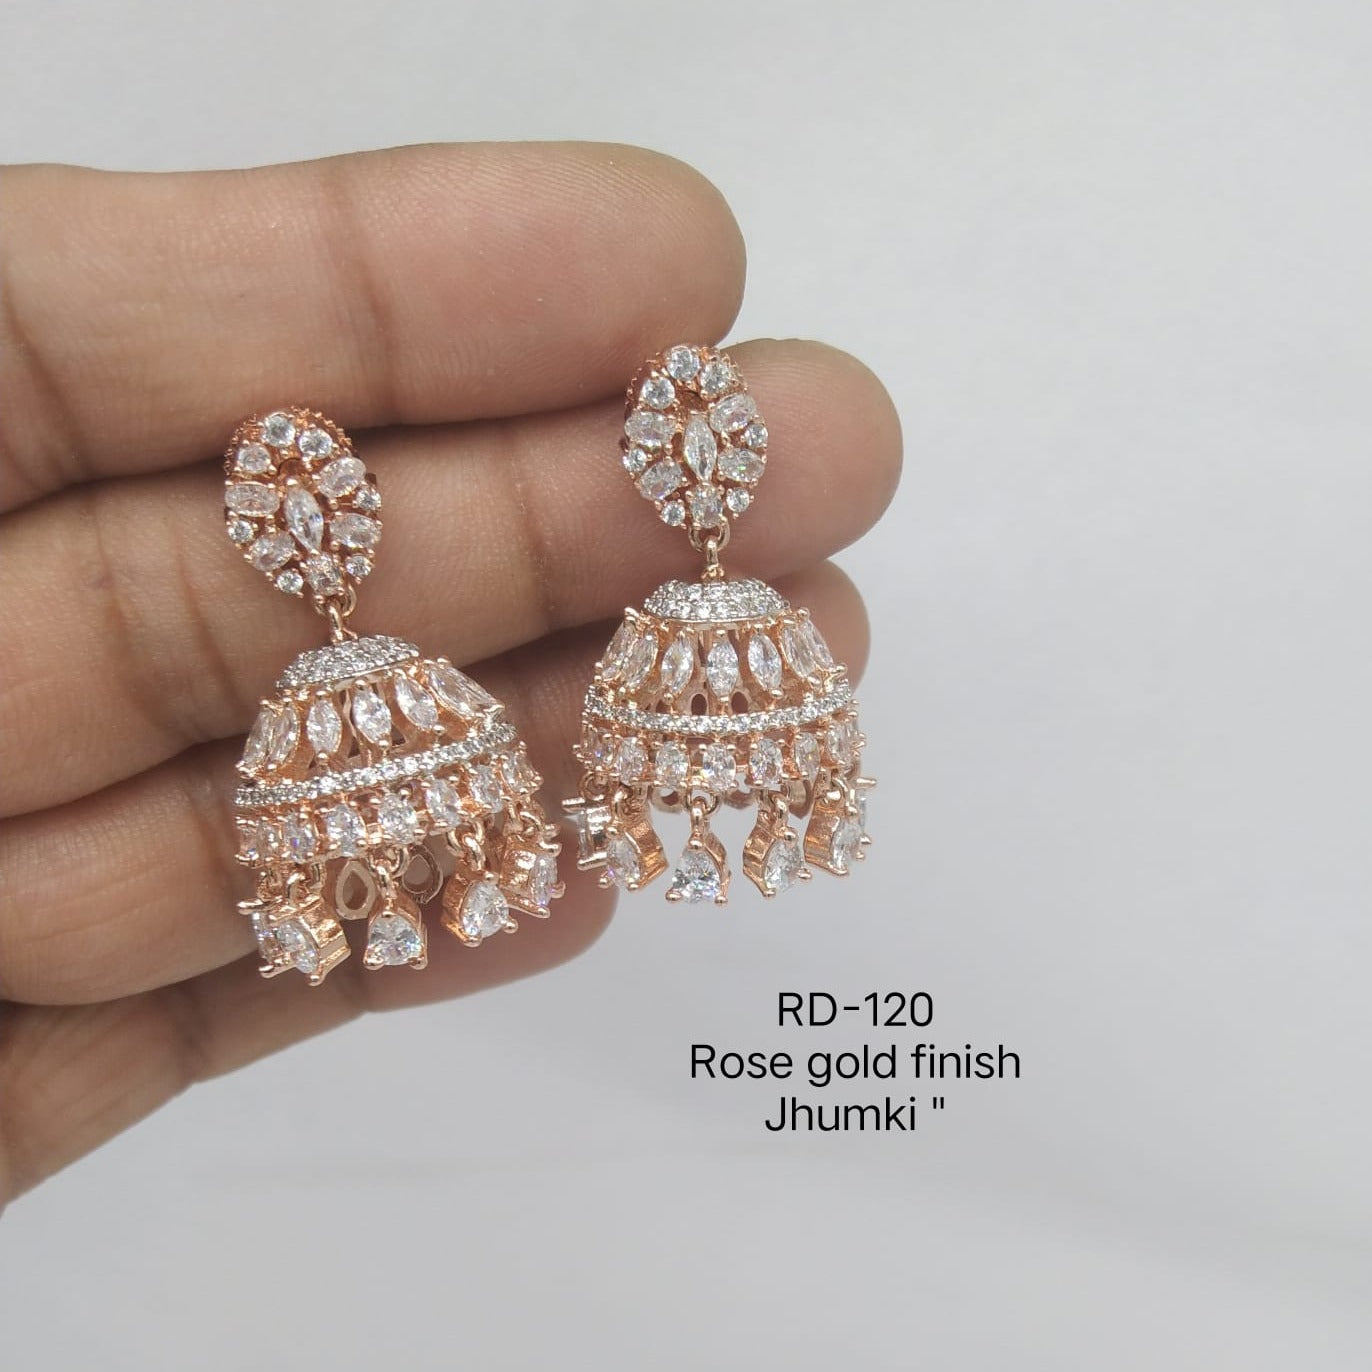 Whimsical Charm: American Diamond Small Jhumka Earrings Collection